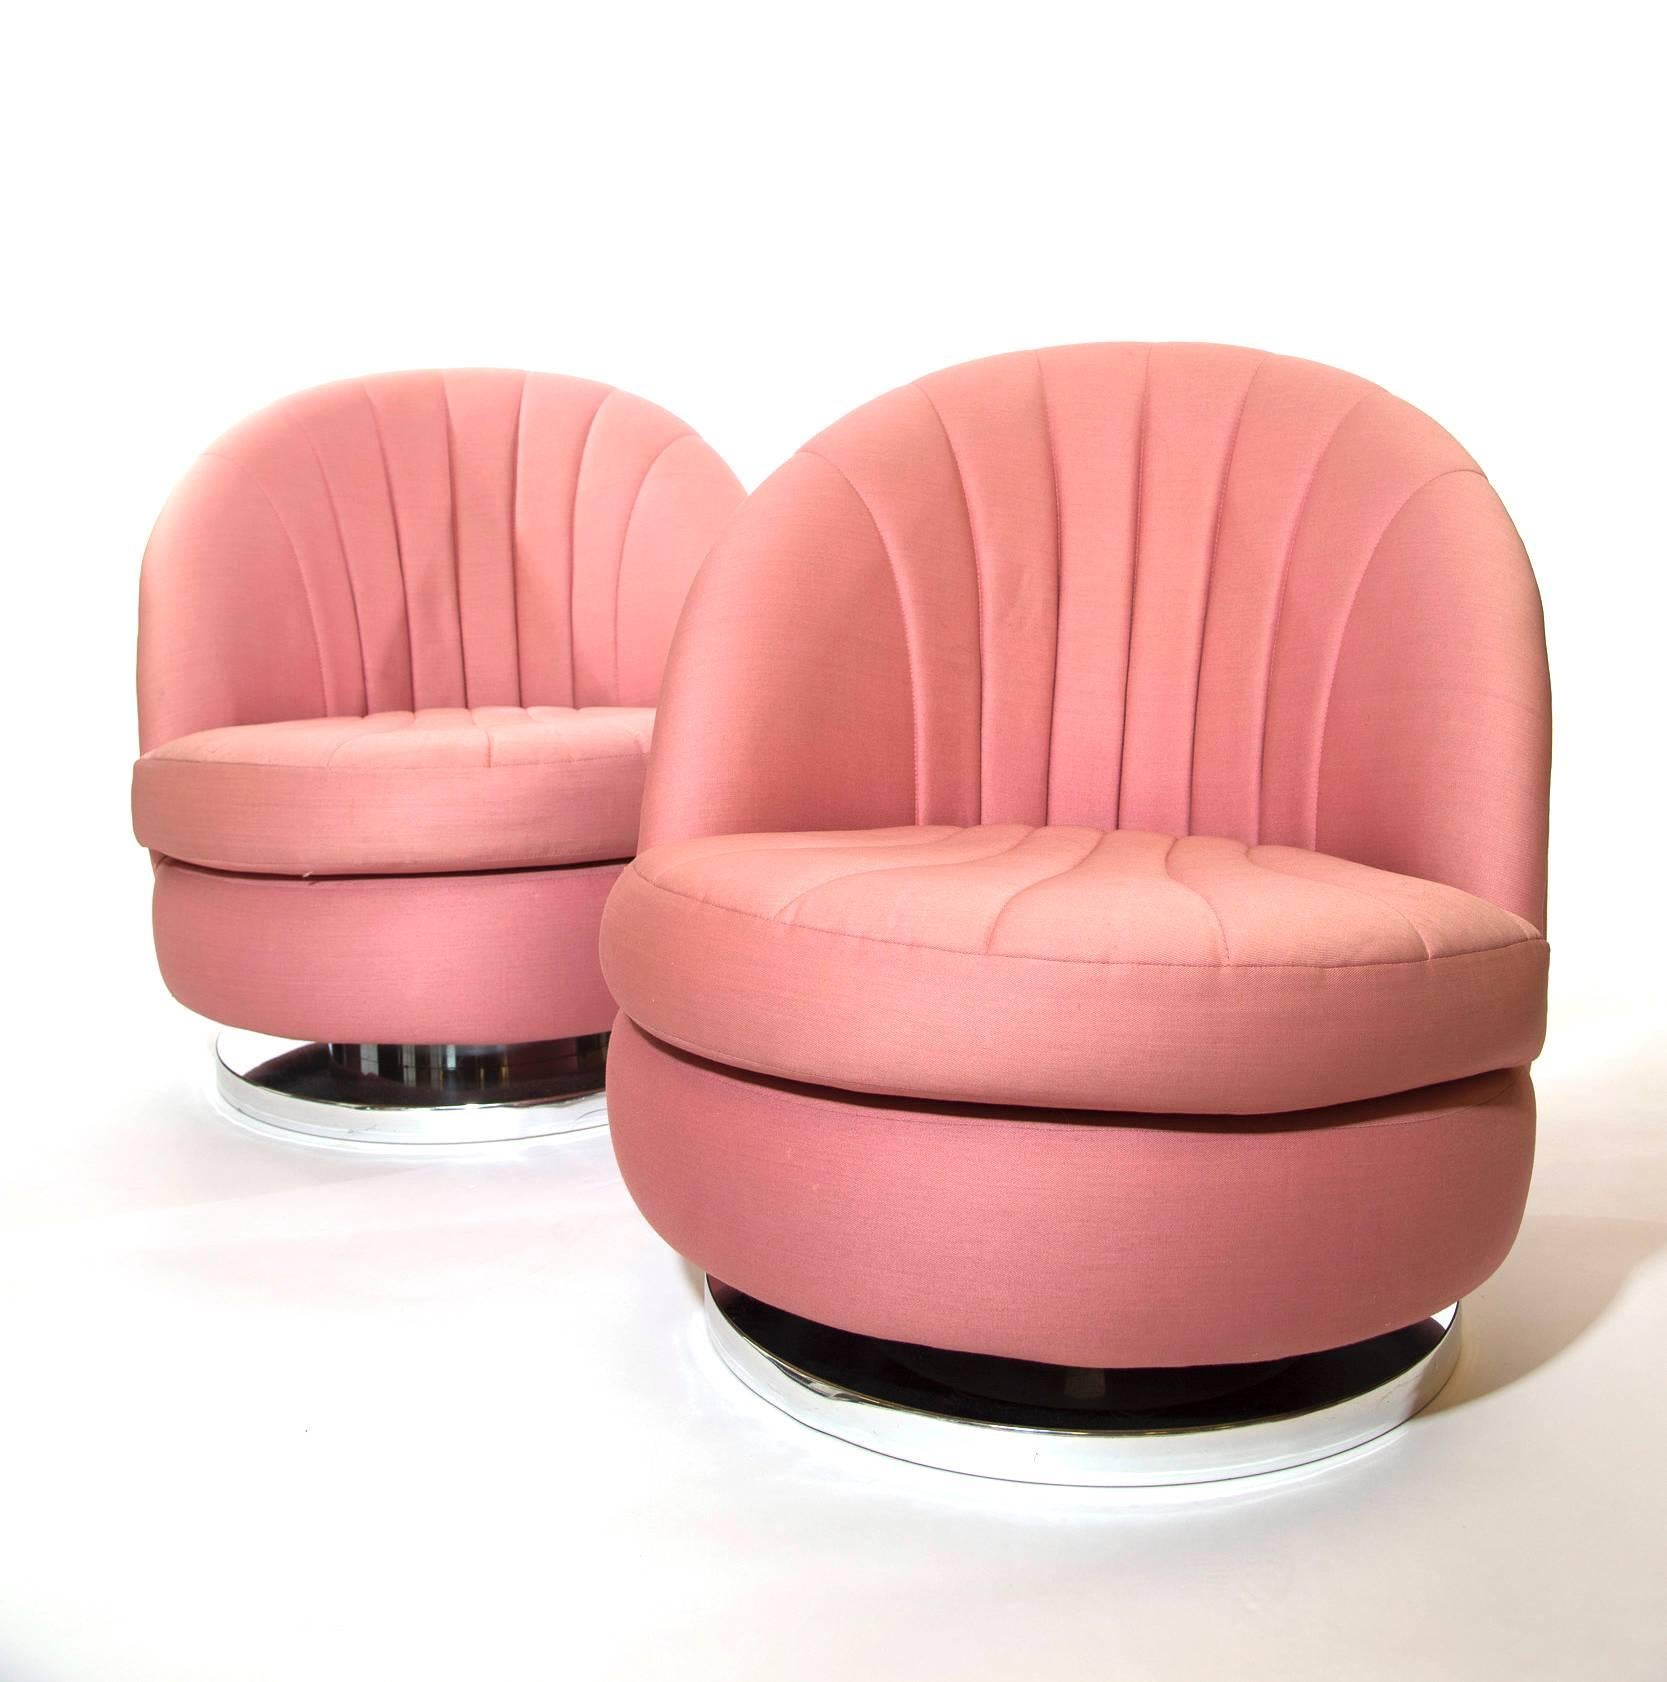 Fine pair of Milo Baughman for Thayer Coggin Pair of Chrome Swivel Chairs. One chair retains the Original Thayer Coggin Label.